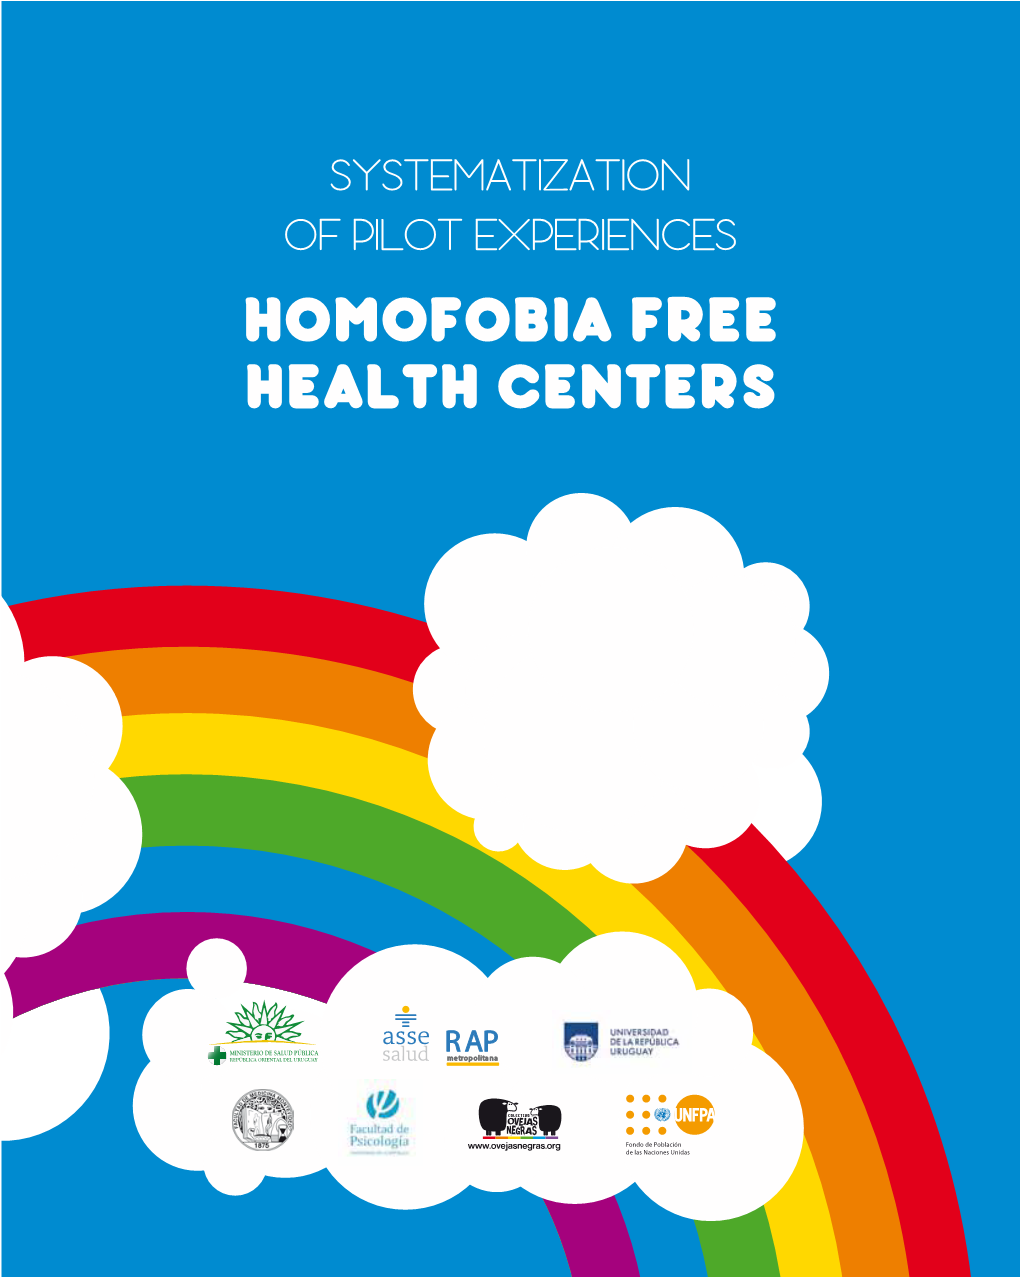 Homofobia Free Health Centers